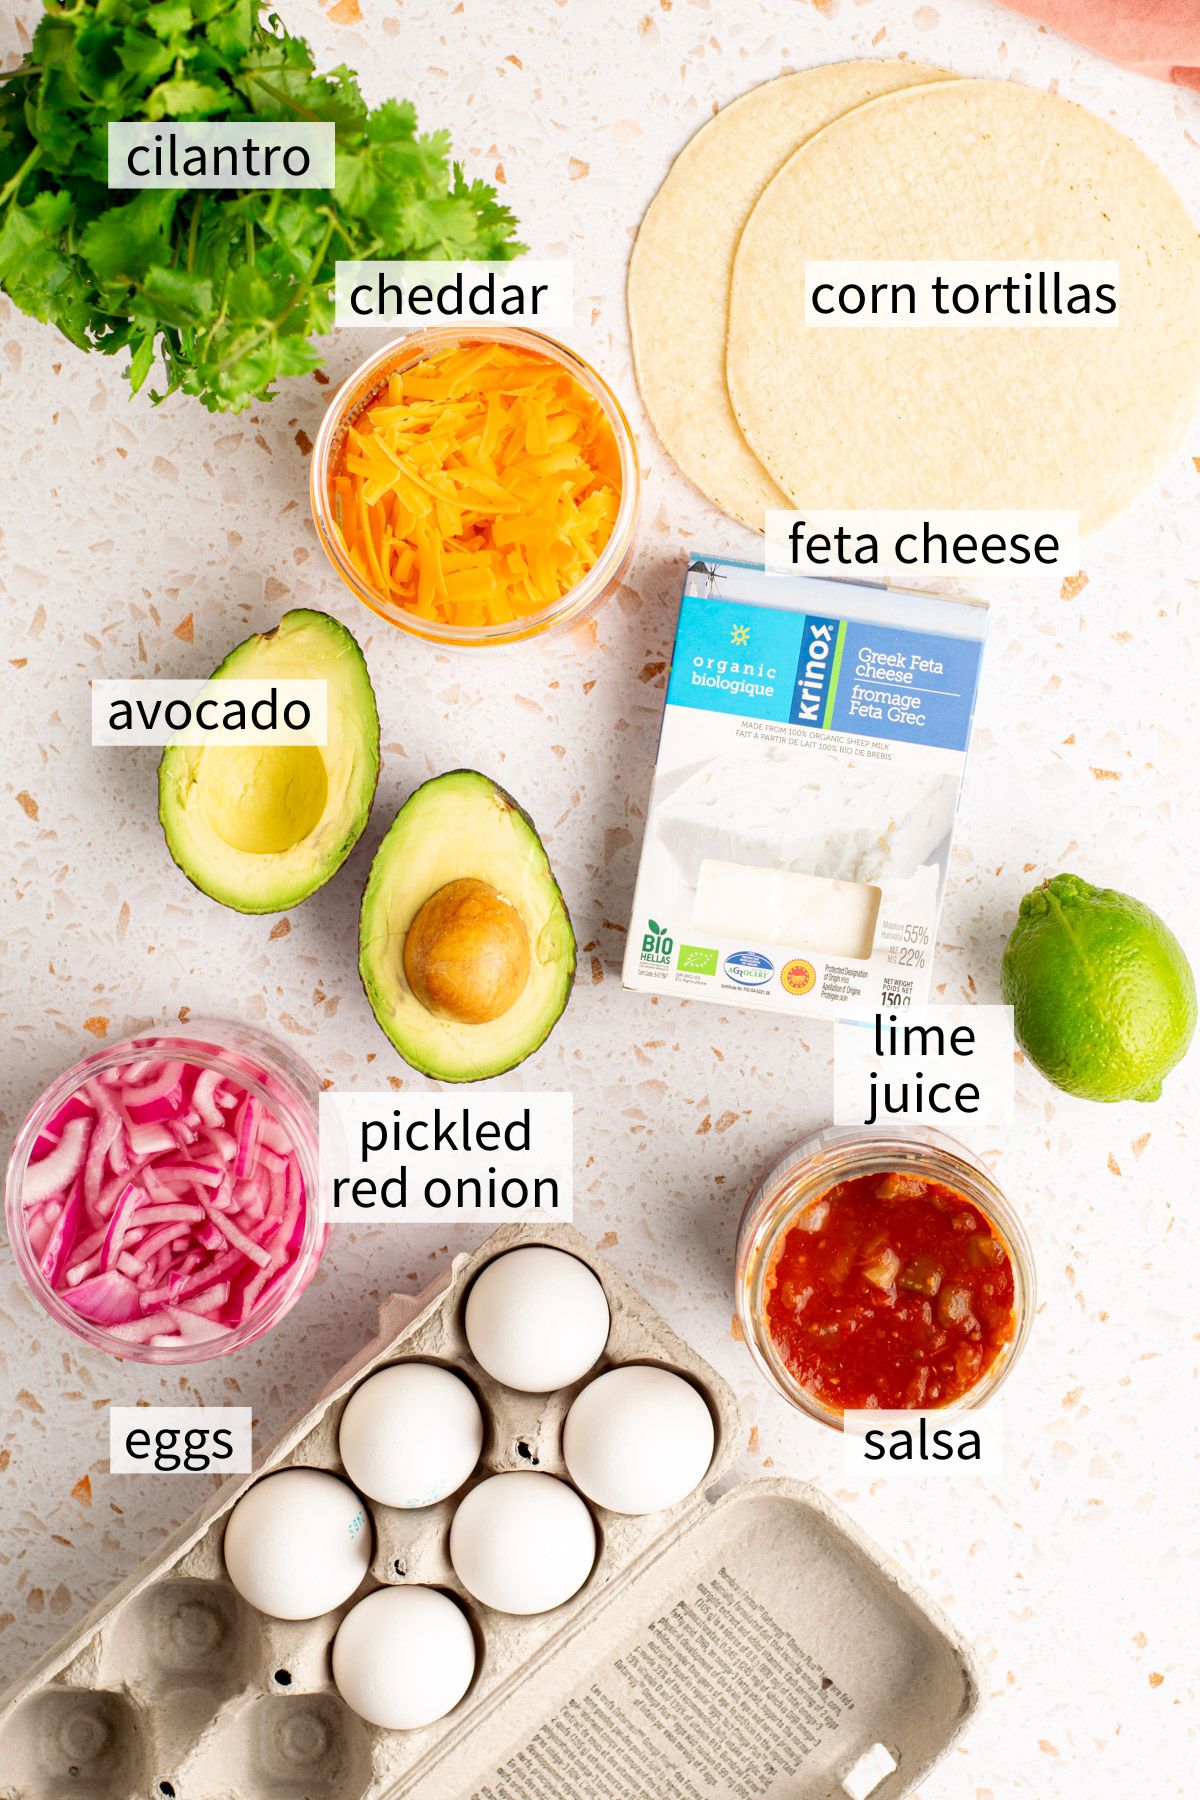 ingredients to make breakfast tacos.